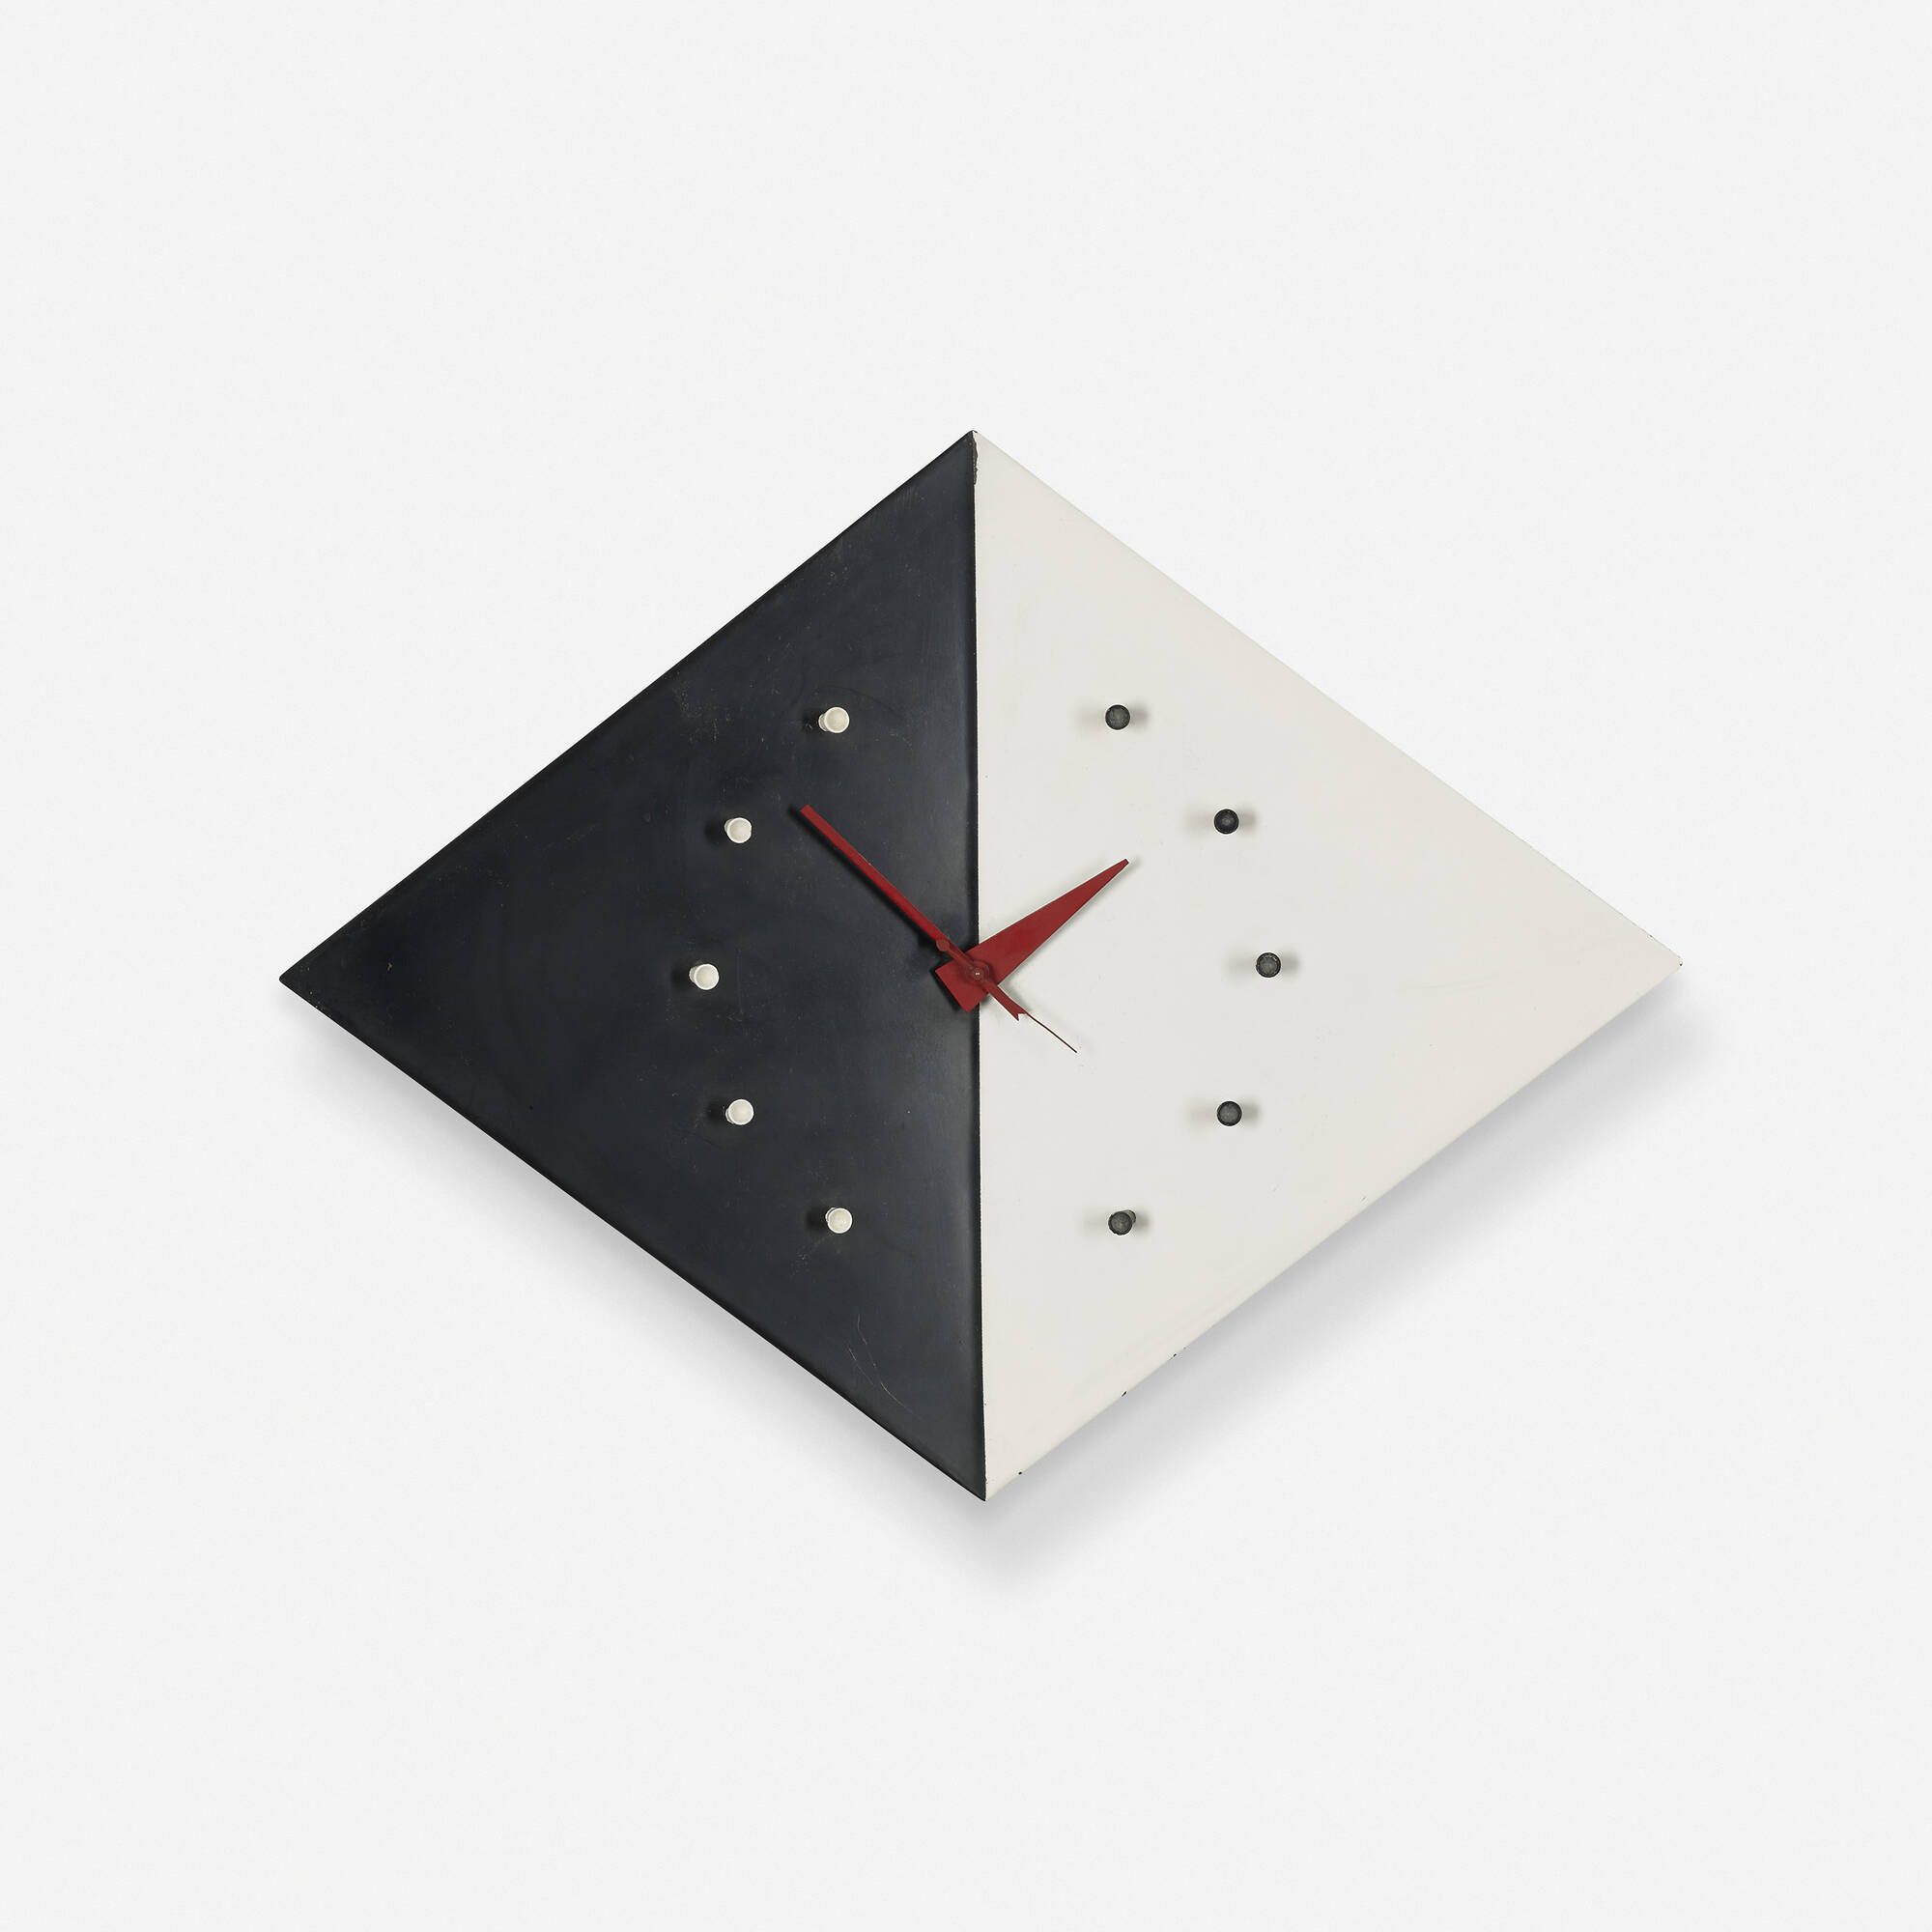 320: GEORGE NELSON & ASSOCIATES, Kite wall clock, model 2201D